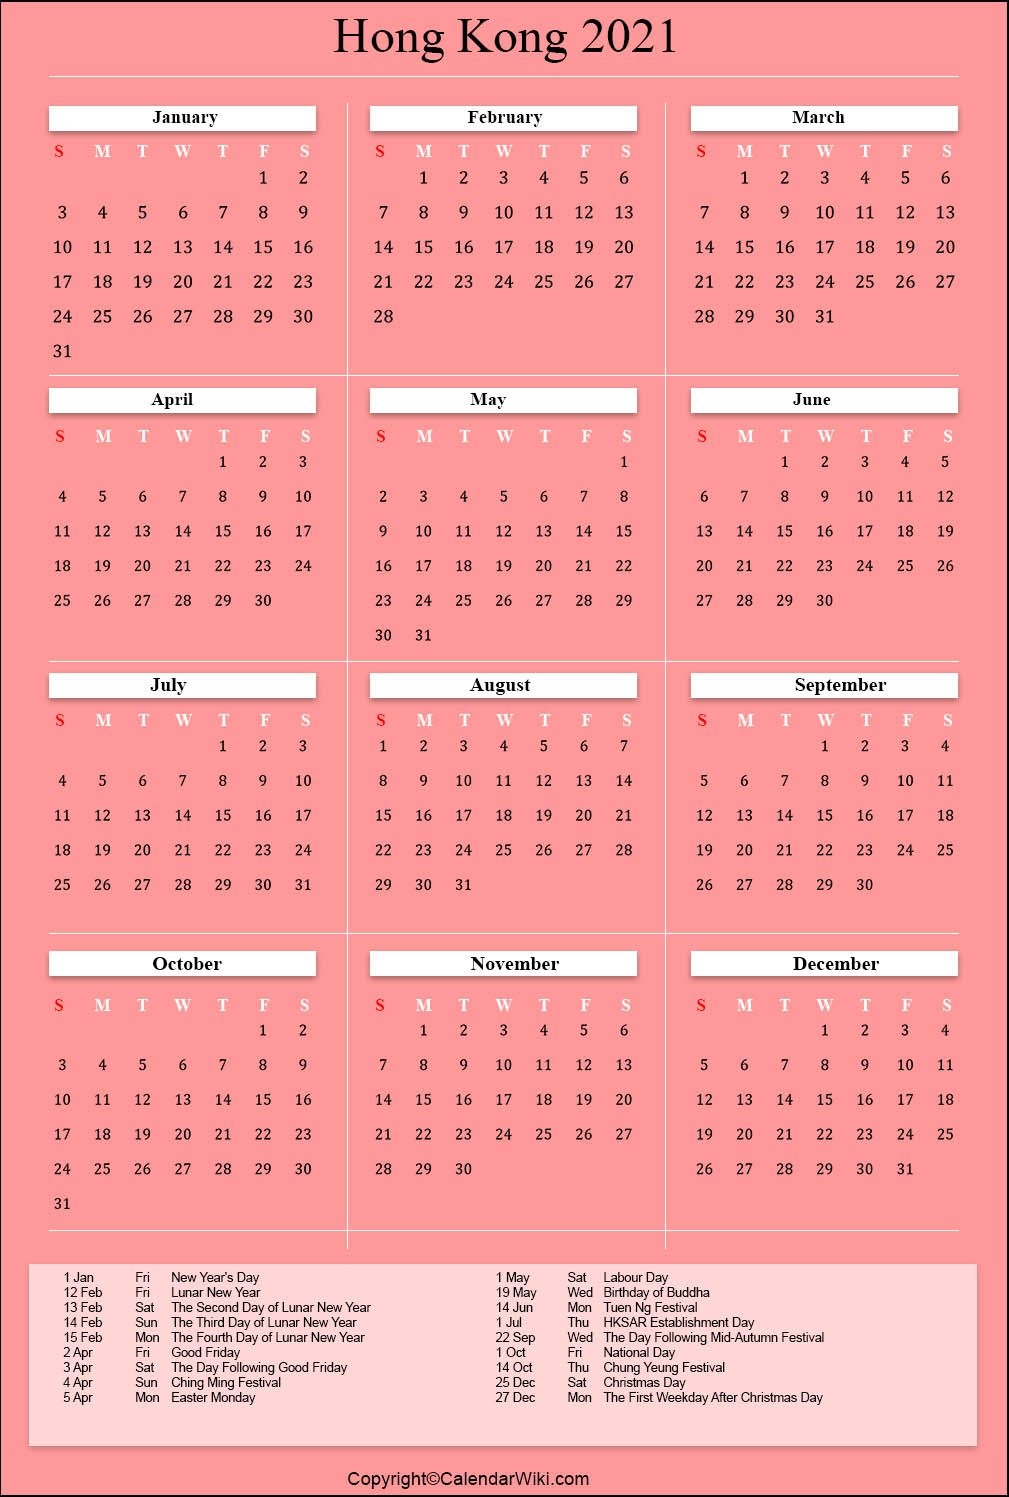 printable hongkong calendar 2021 with holidays [public holidays]